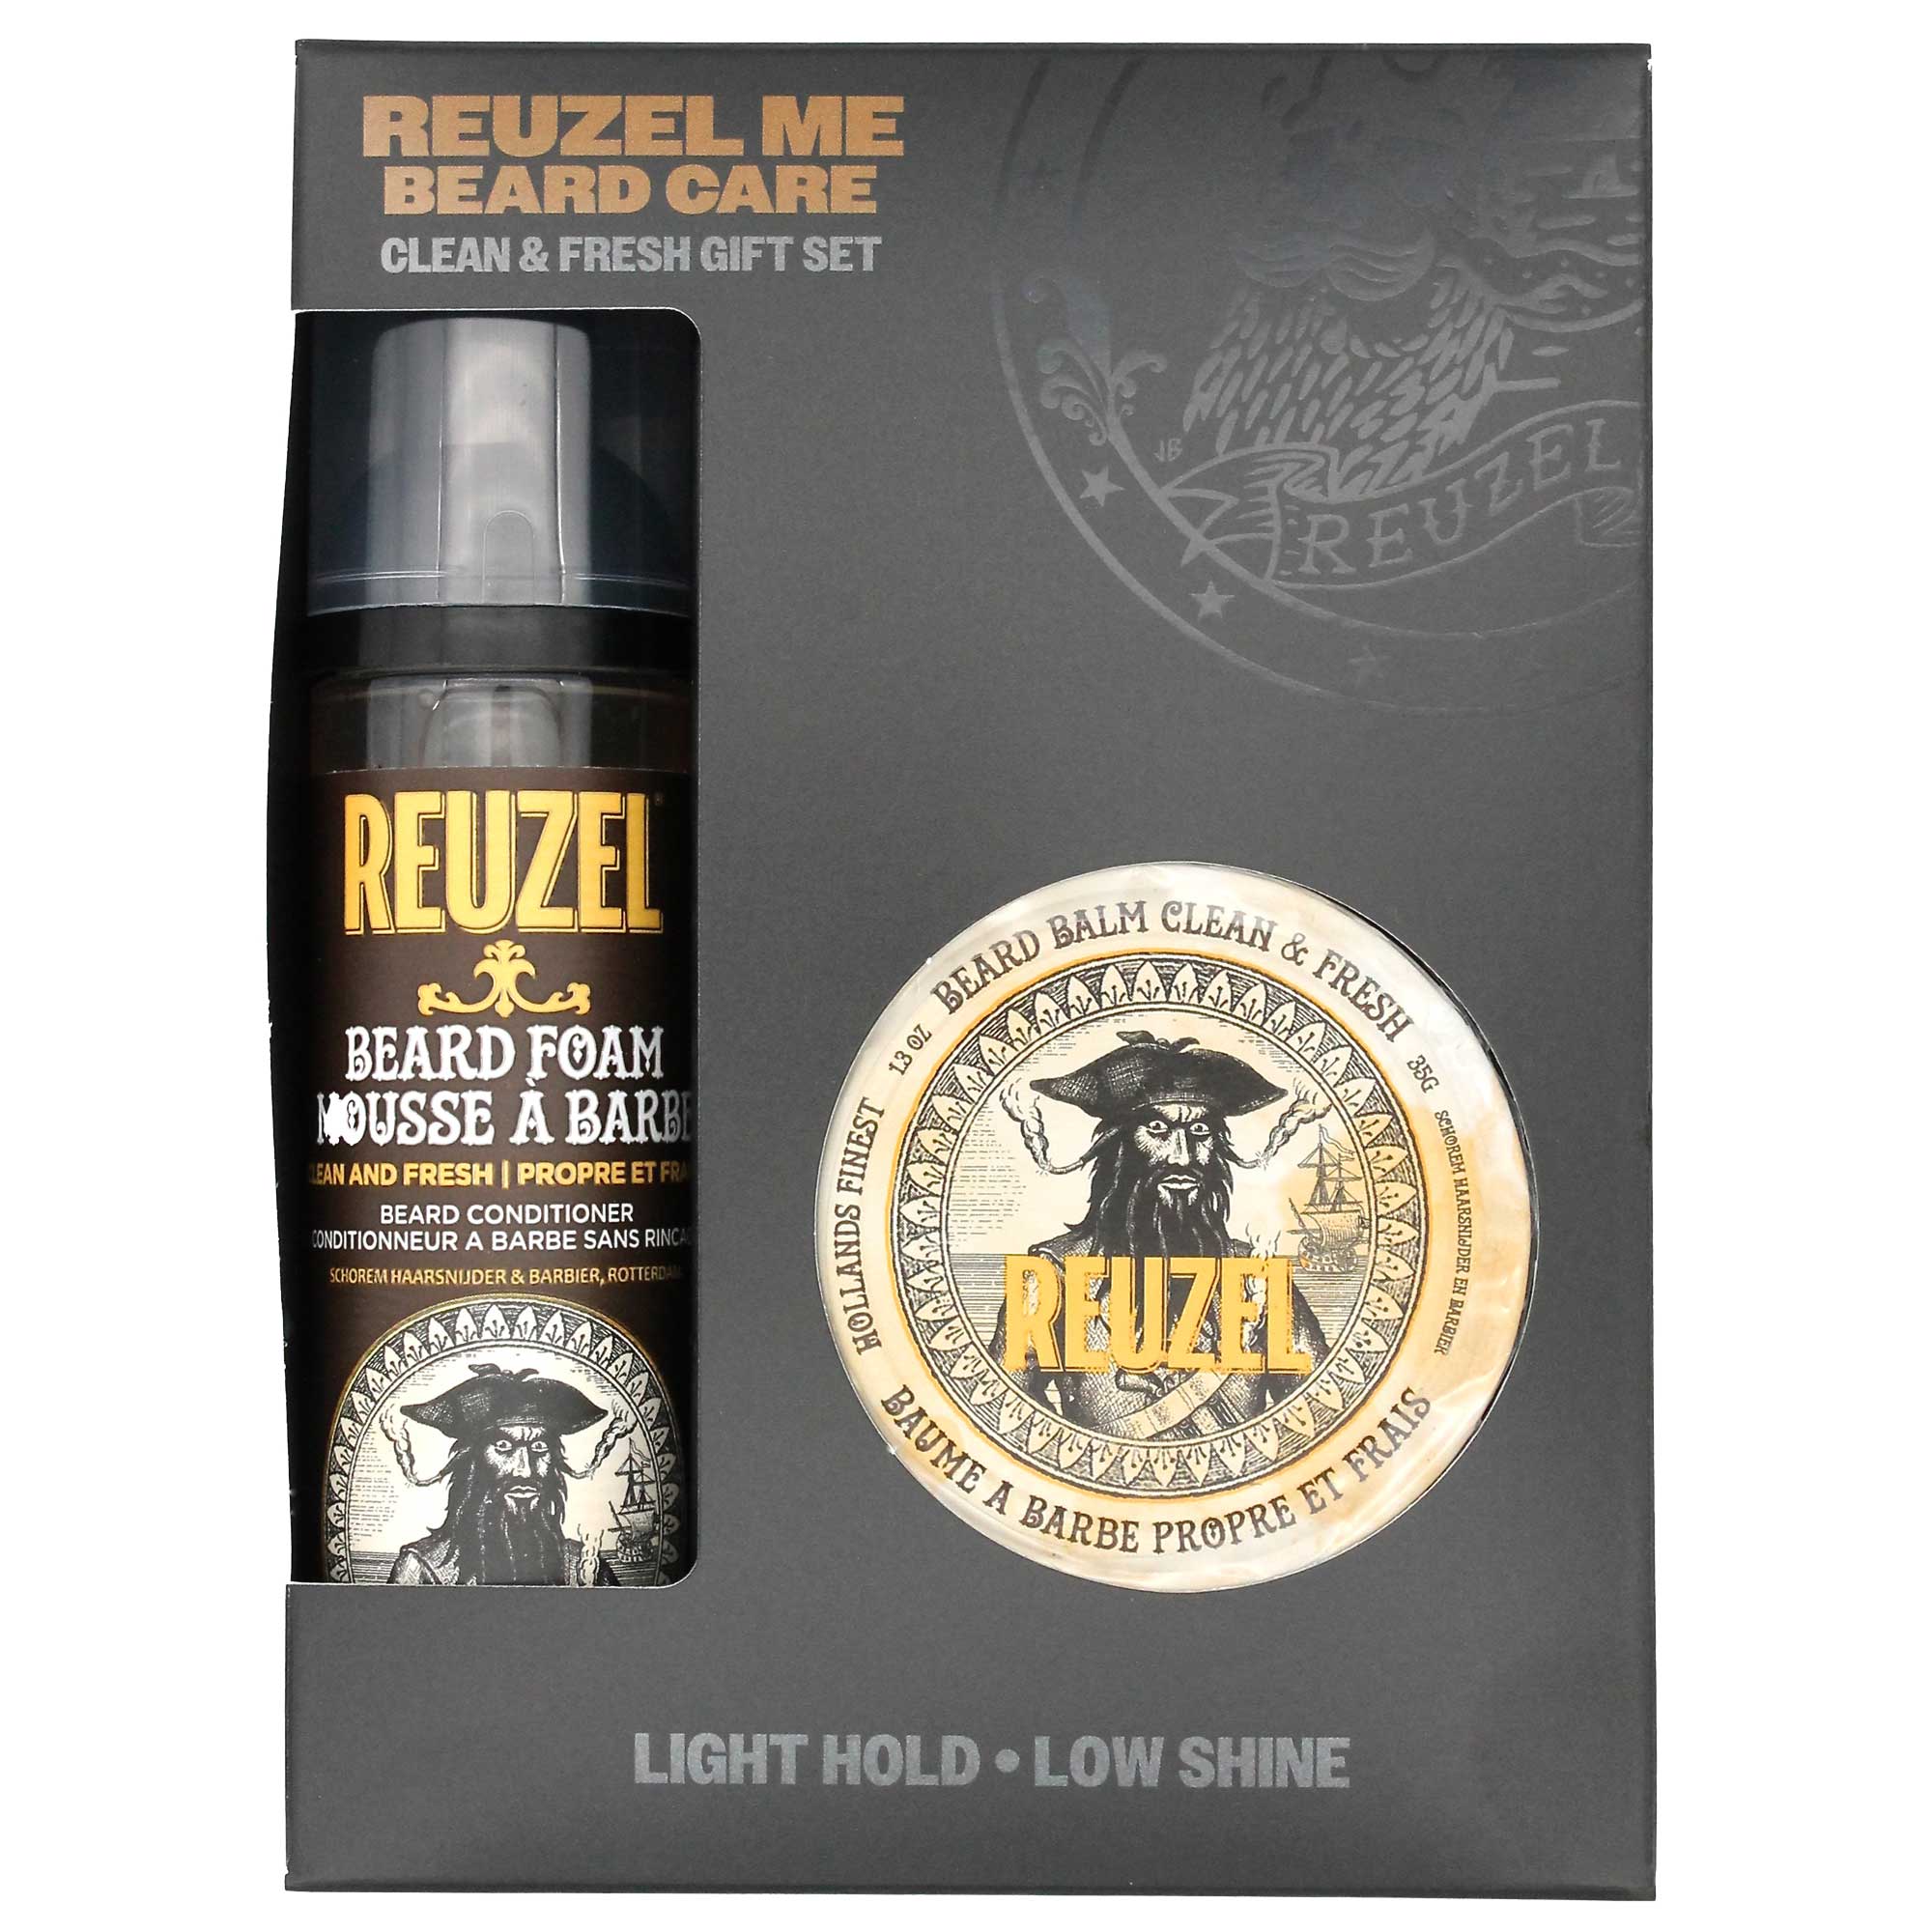 Reuzel Me Beard Care Gift Set, Clean & Fresh